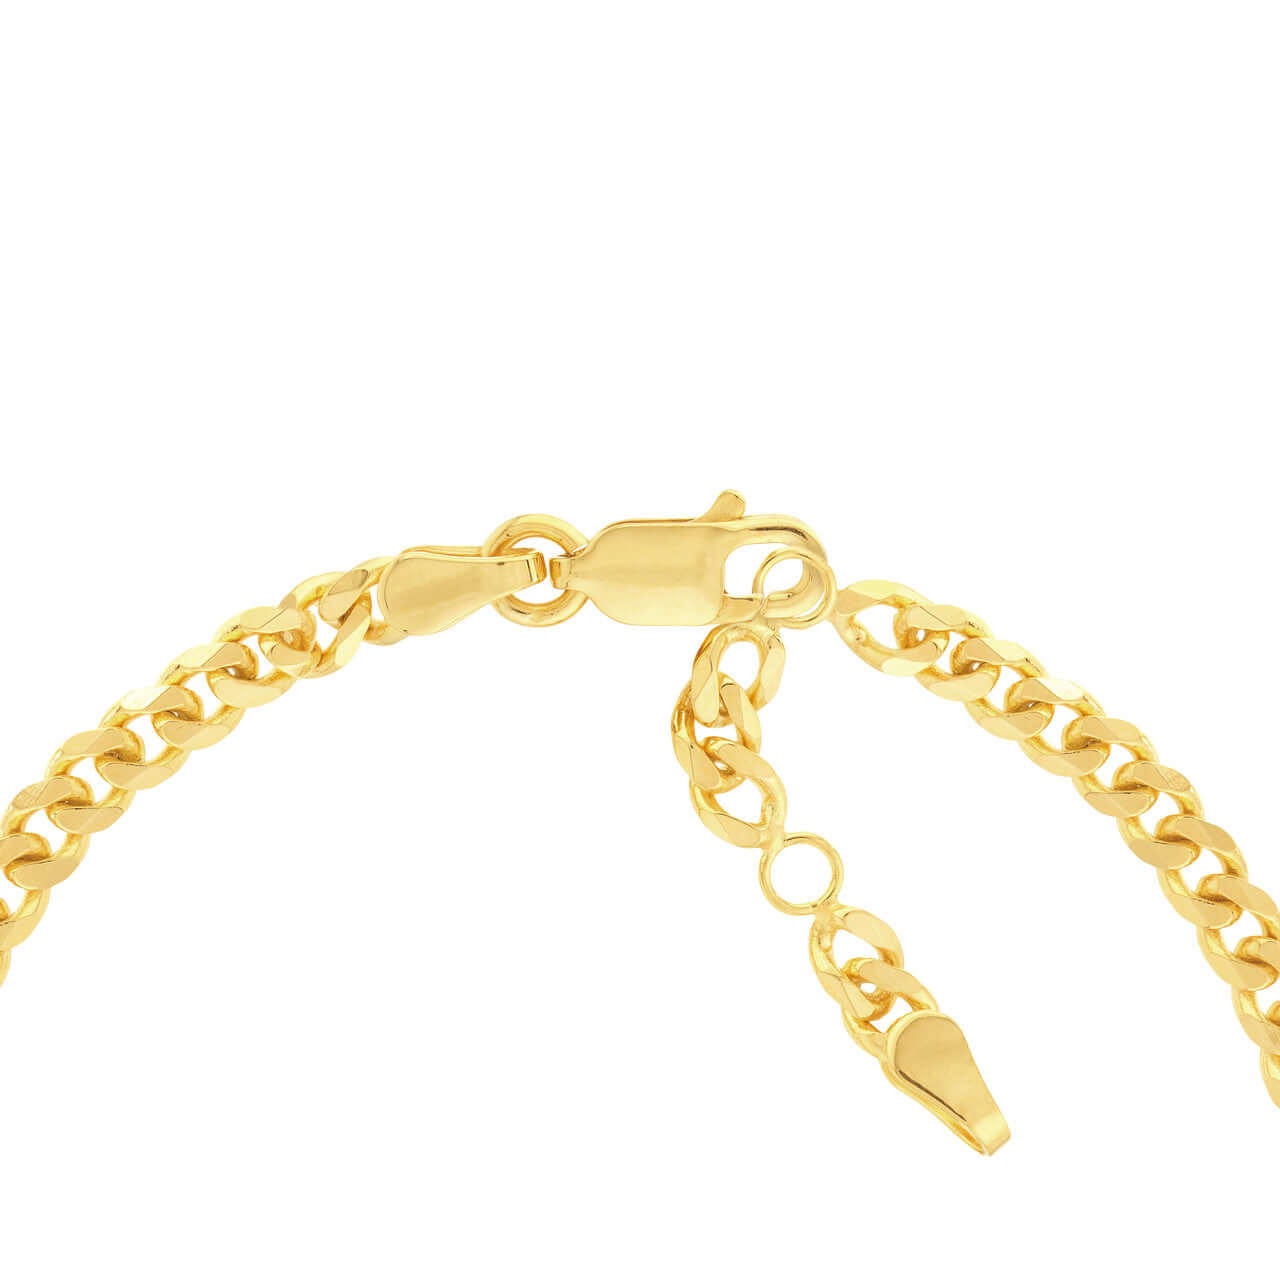 Gold Cuban Chain Heart Bracelet